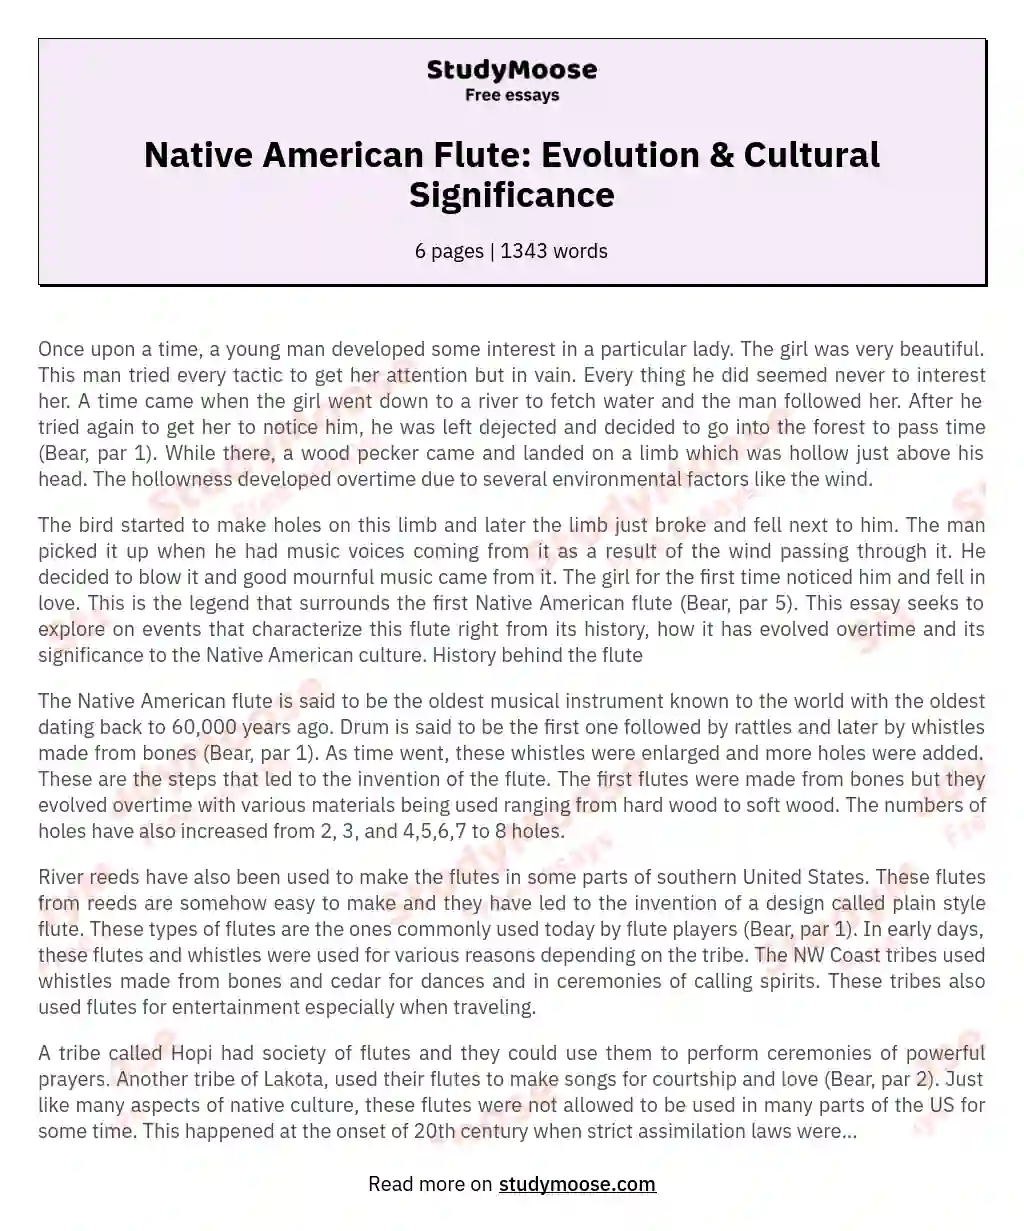 Native American Flute: Evolution & Cultural Significance essay